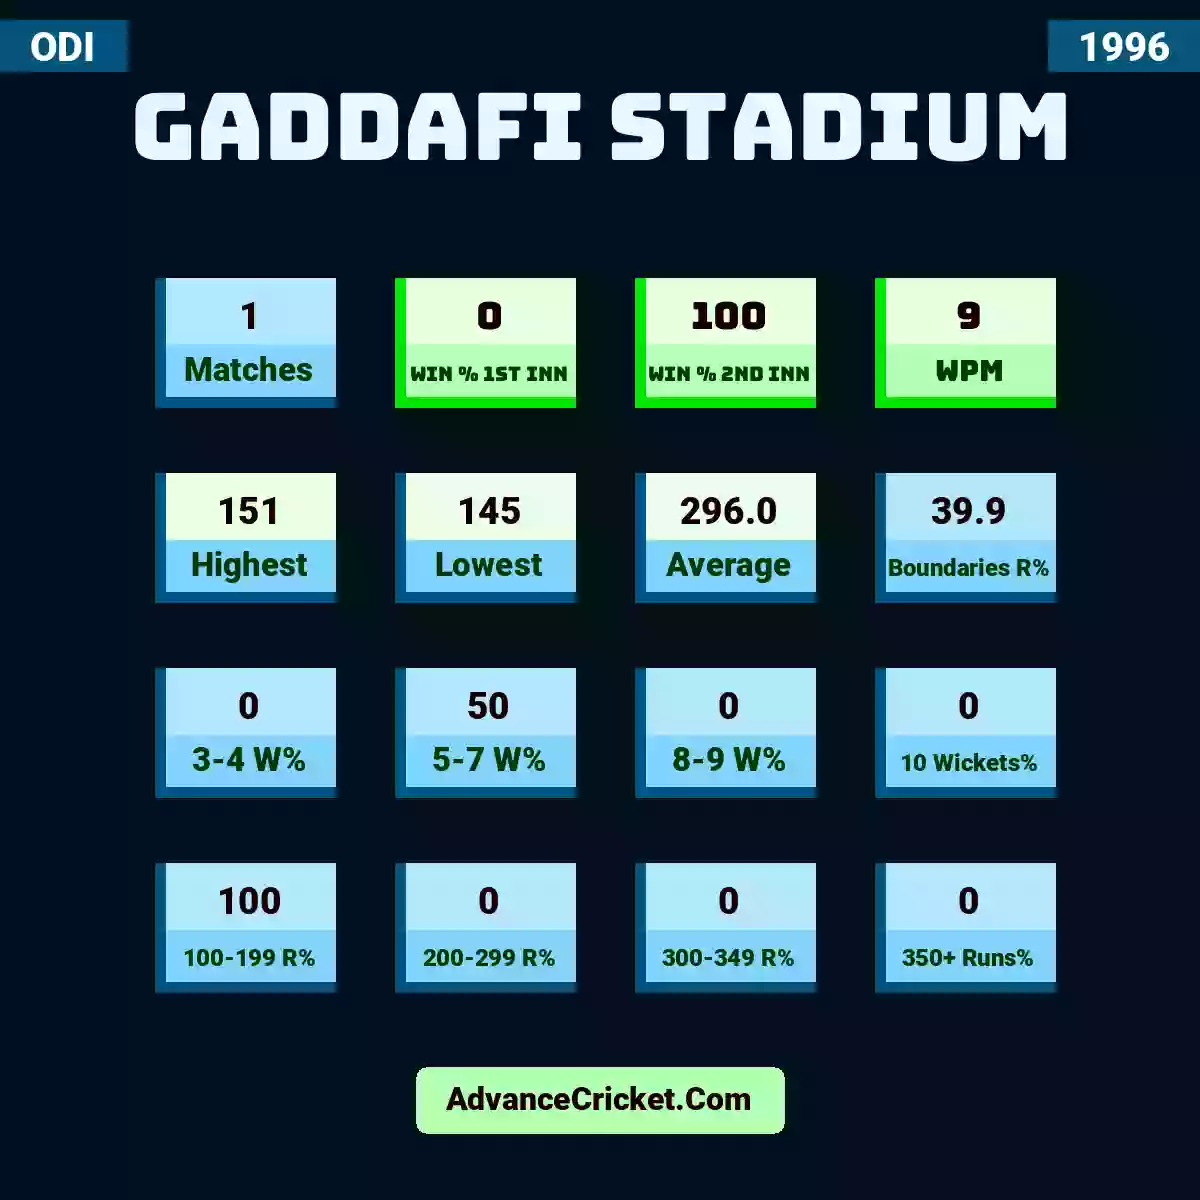 Image showing Gaddafi Stadium with Matches: 1, Win % 1st Inn: 0, Win % 2nd Inn: 100, WPM: 9, Highest: 151, Lowest: 145, Average: 296.0, Boundaries R%: 39.9, 3-4 W%: 0, 5-7 W%: 50, 8-9 W%: 0, 10 Wickets%: 0, 100-199 R%: 100, 200-299 R%: 0, 300-349 R%: 0, 350+ Runs%: 0.